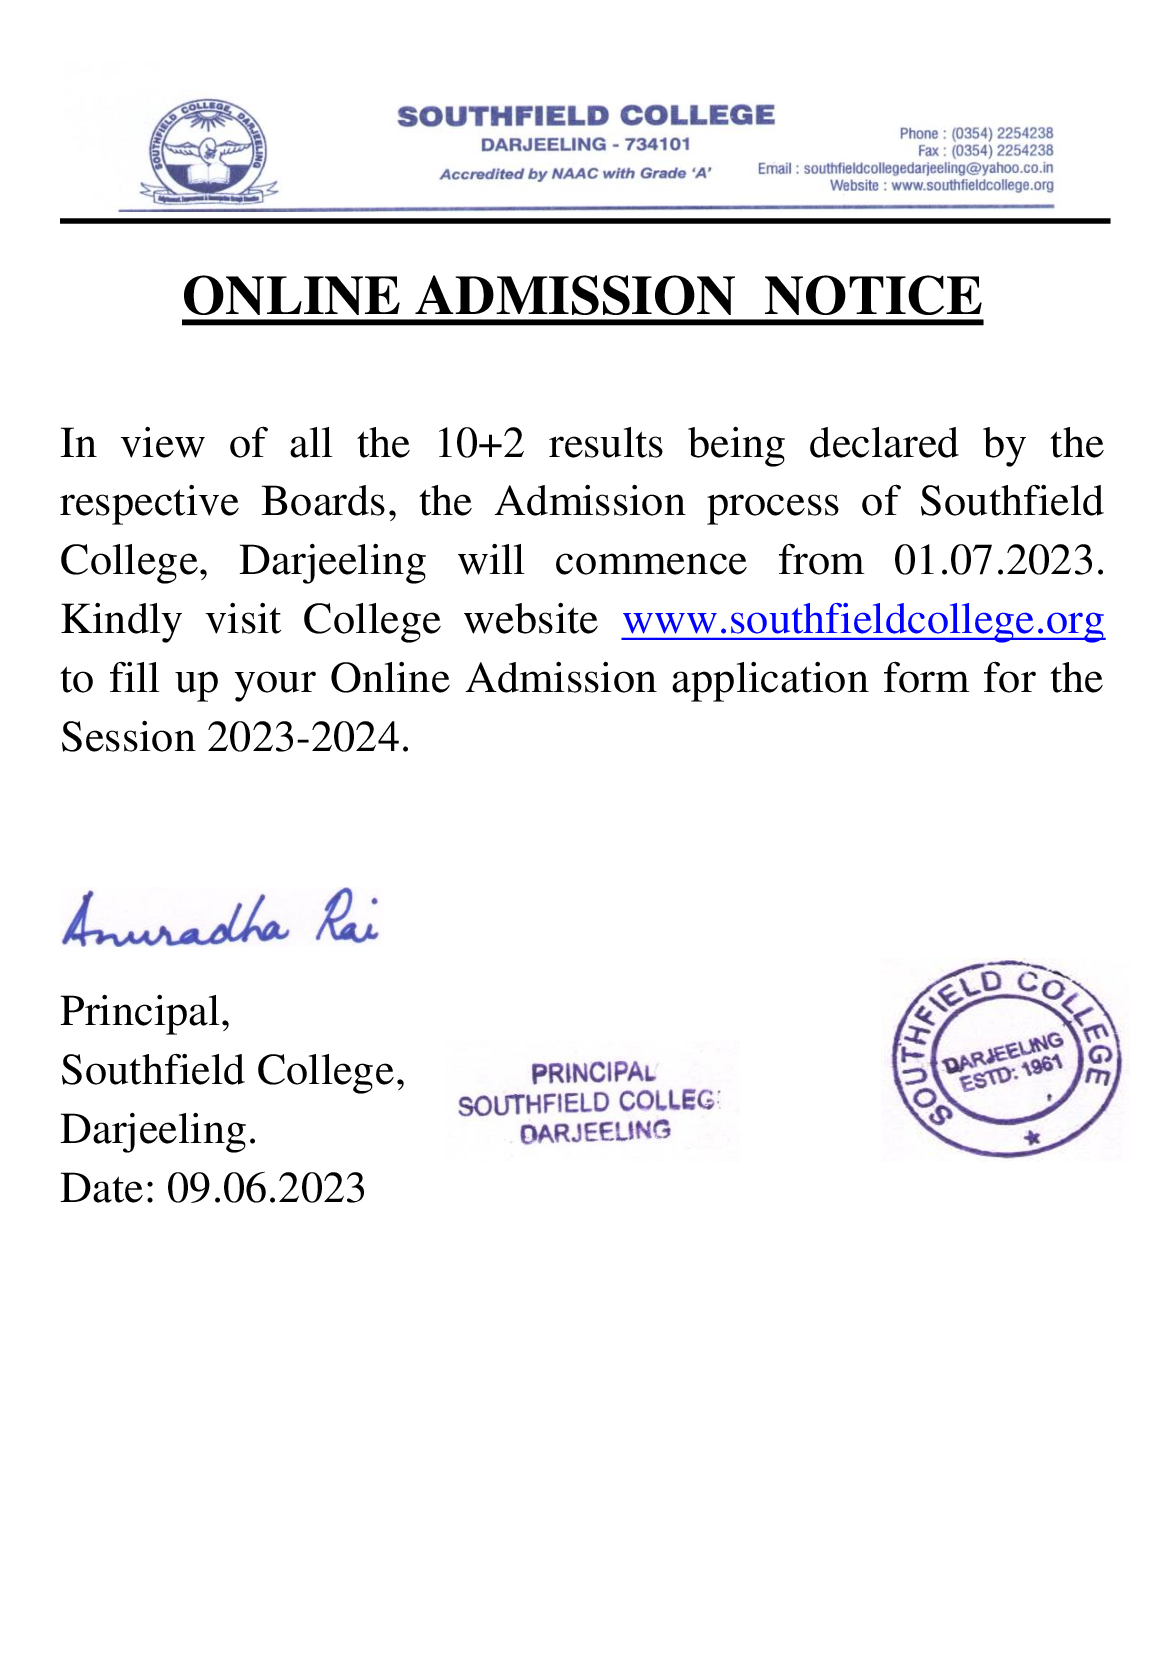 ADMISSION NOTICE 20232024 Southfield College Darjeeling